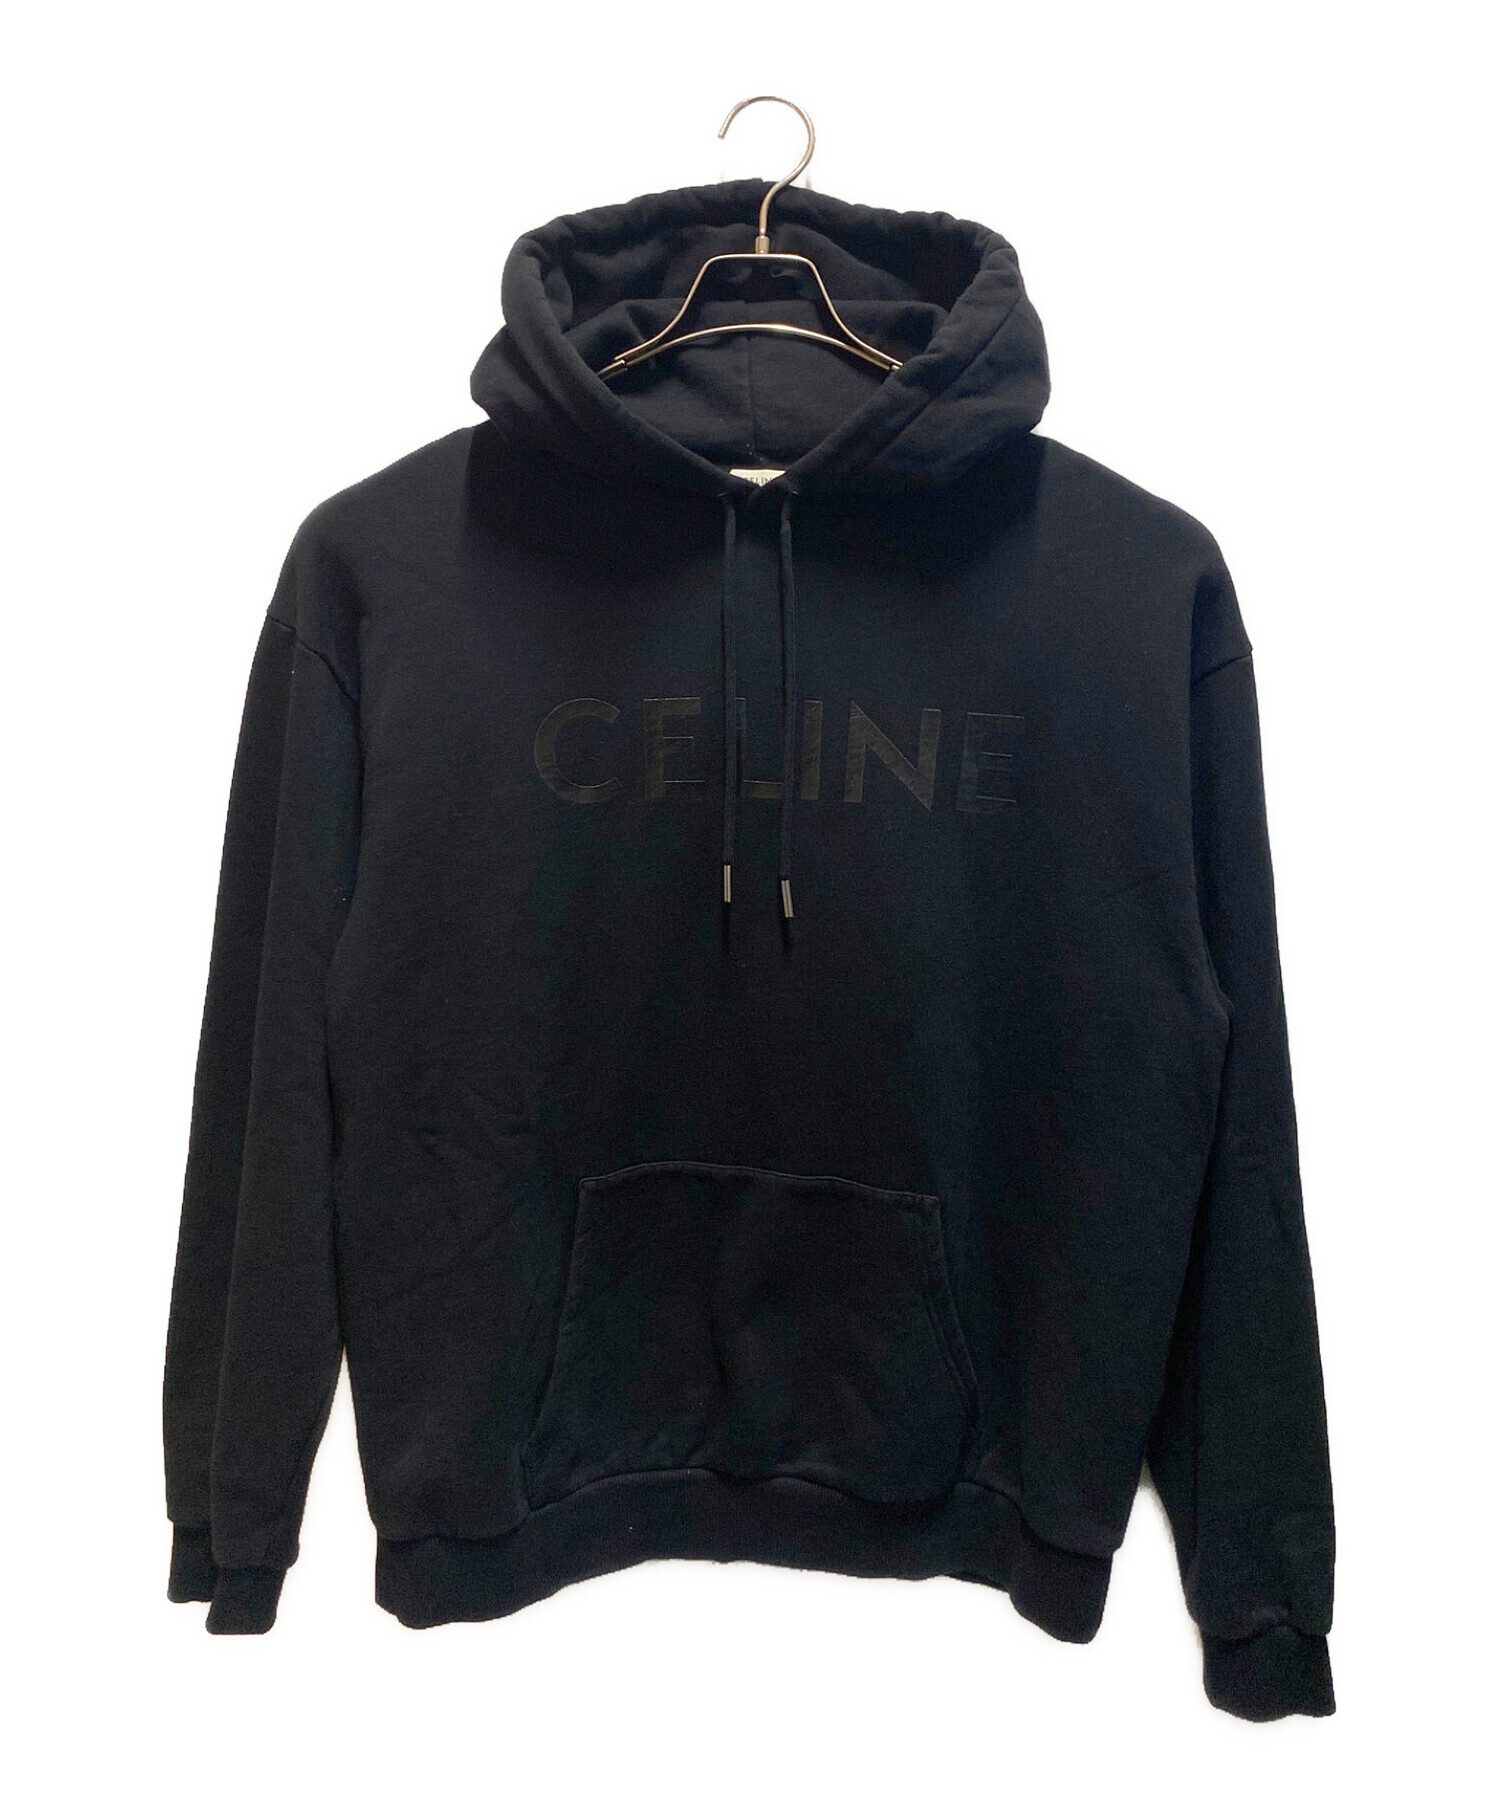 『CELINE』セリーヌ (XL) ロゴプルオーバーパーカー / ブラック商品説明